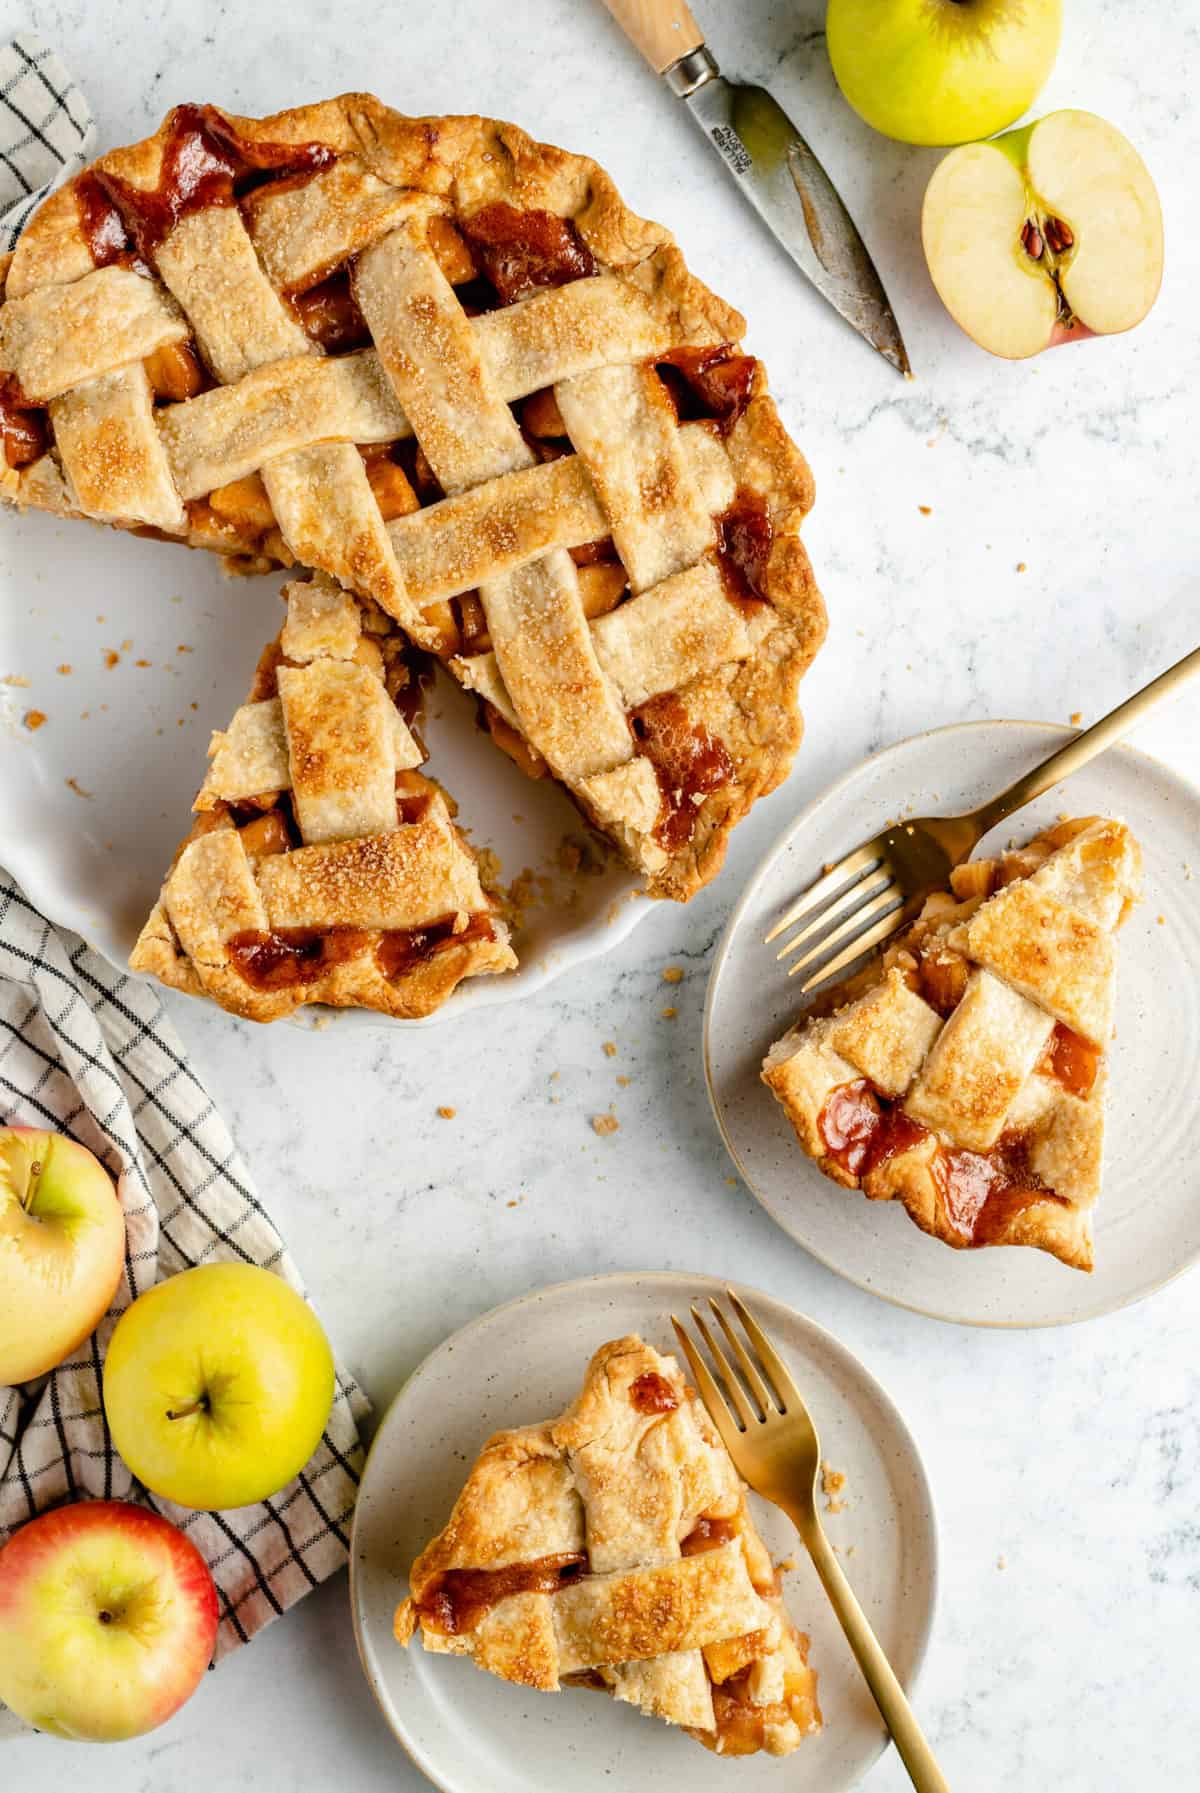 Slices of vegan apple pie on a platter.